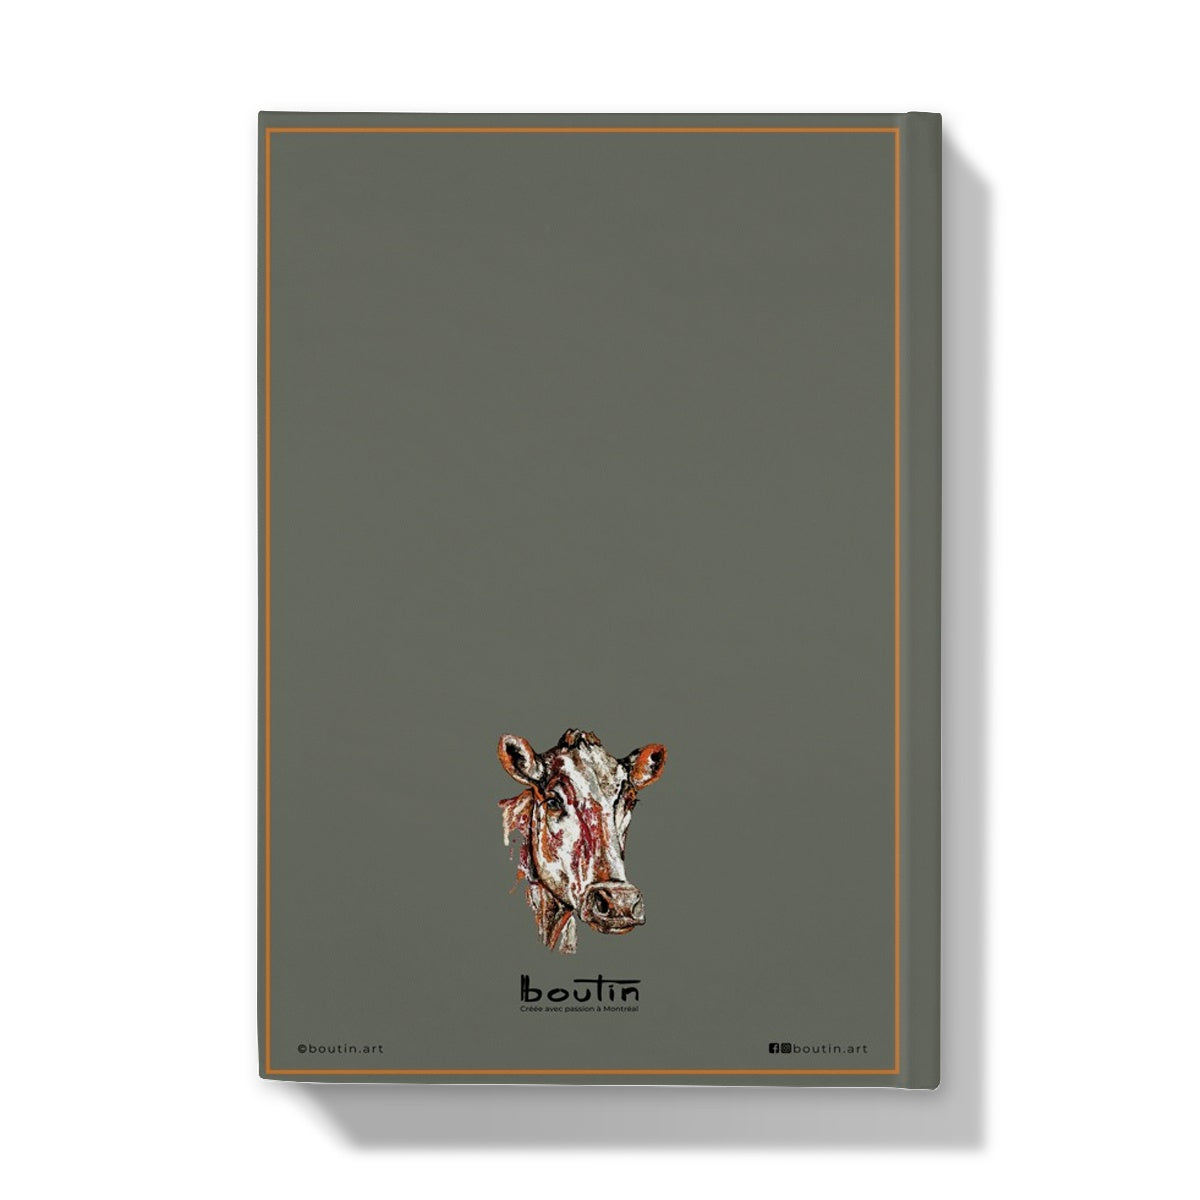 Betty moss - Notebook by the artist Boutin